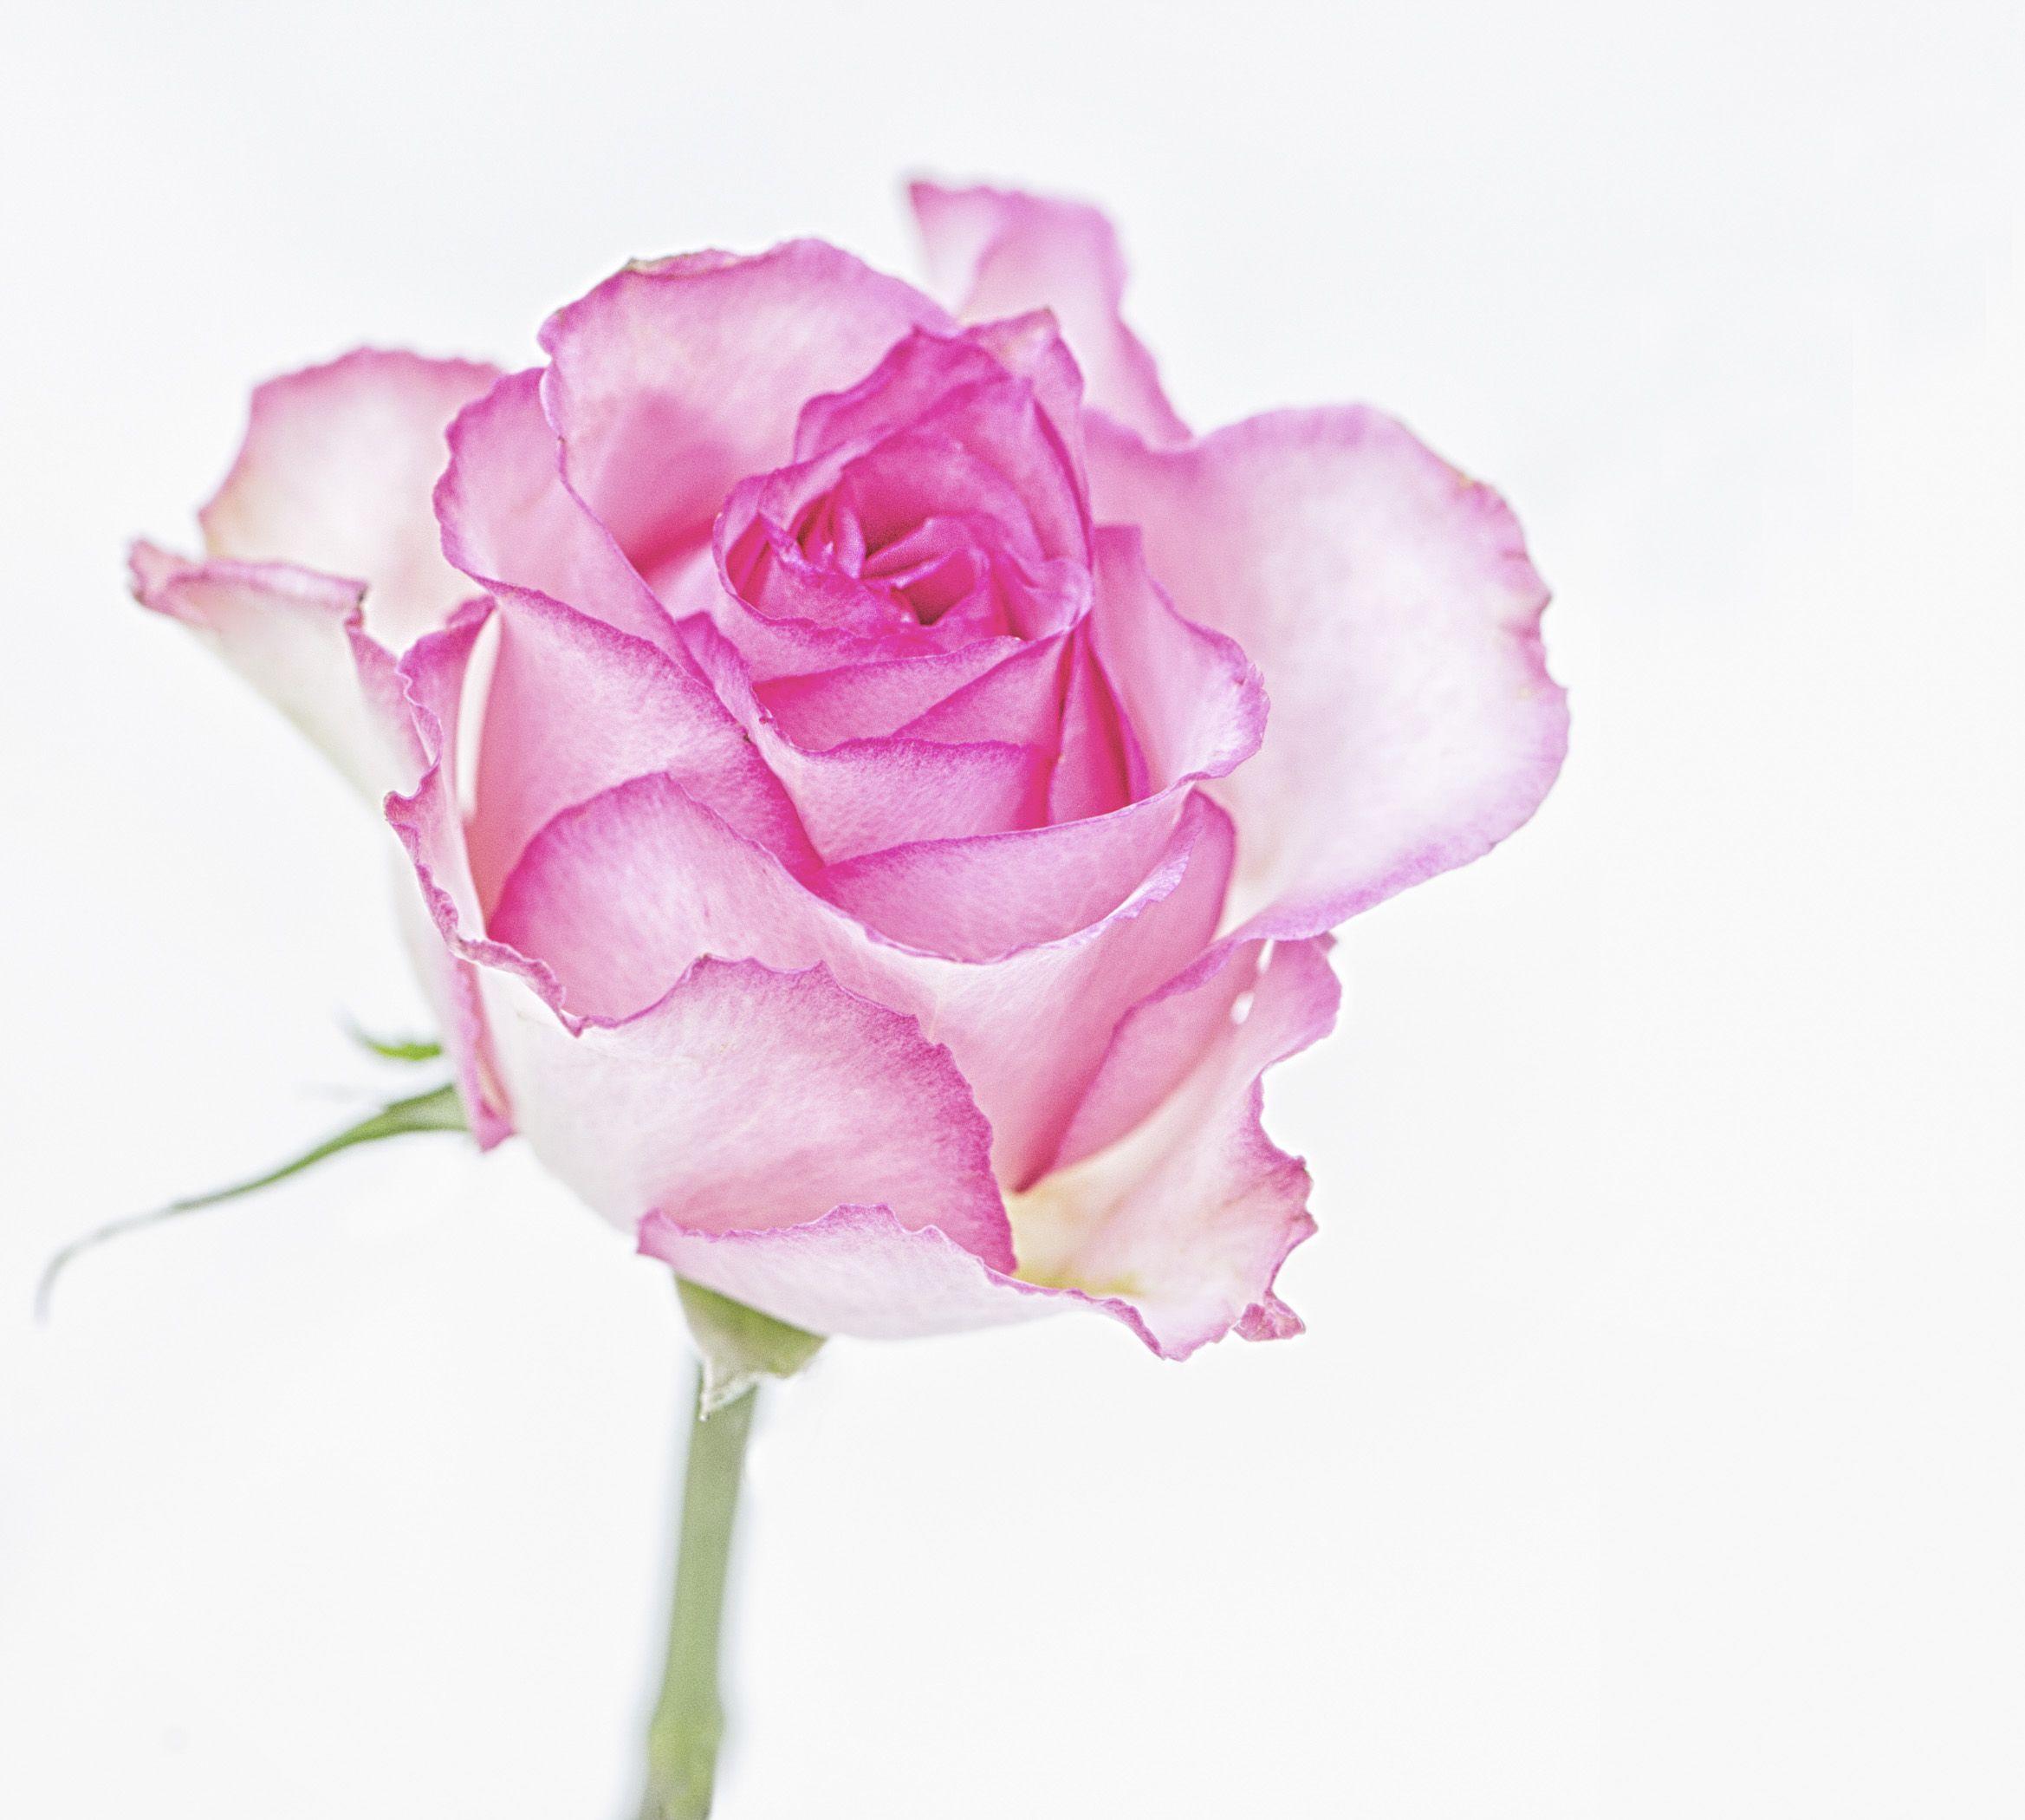 pink rose on white background. copyright Nancy Kirkpatrick